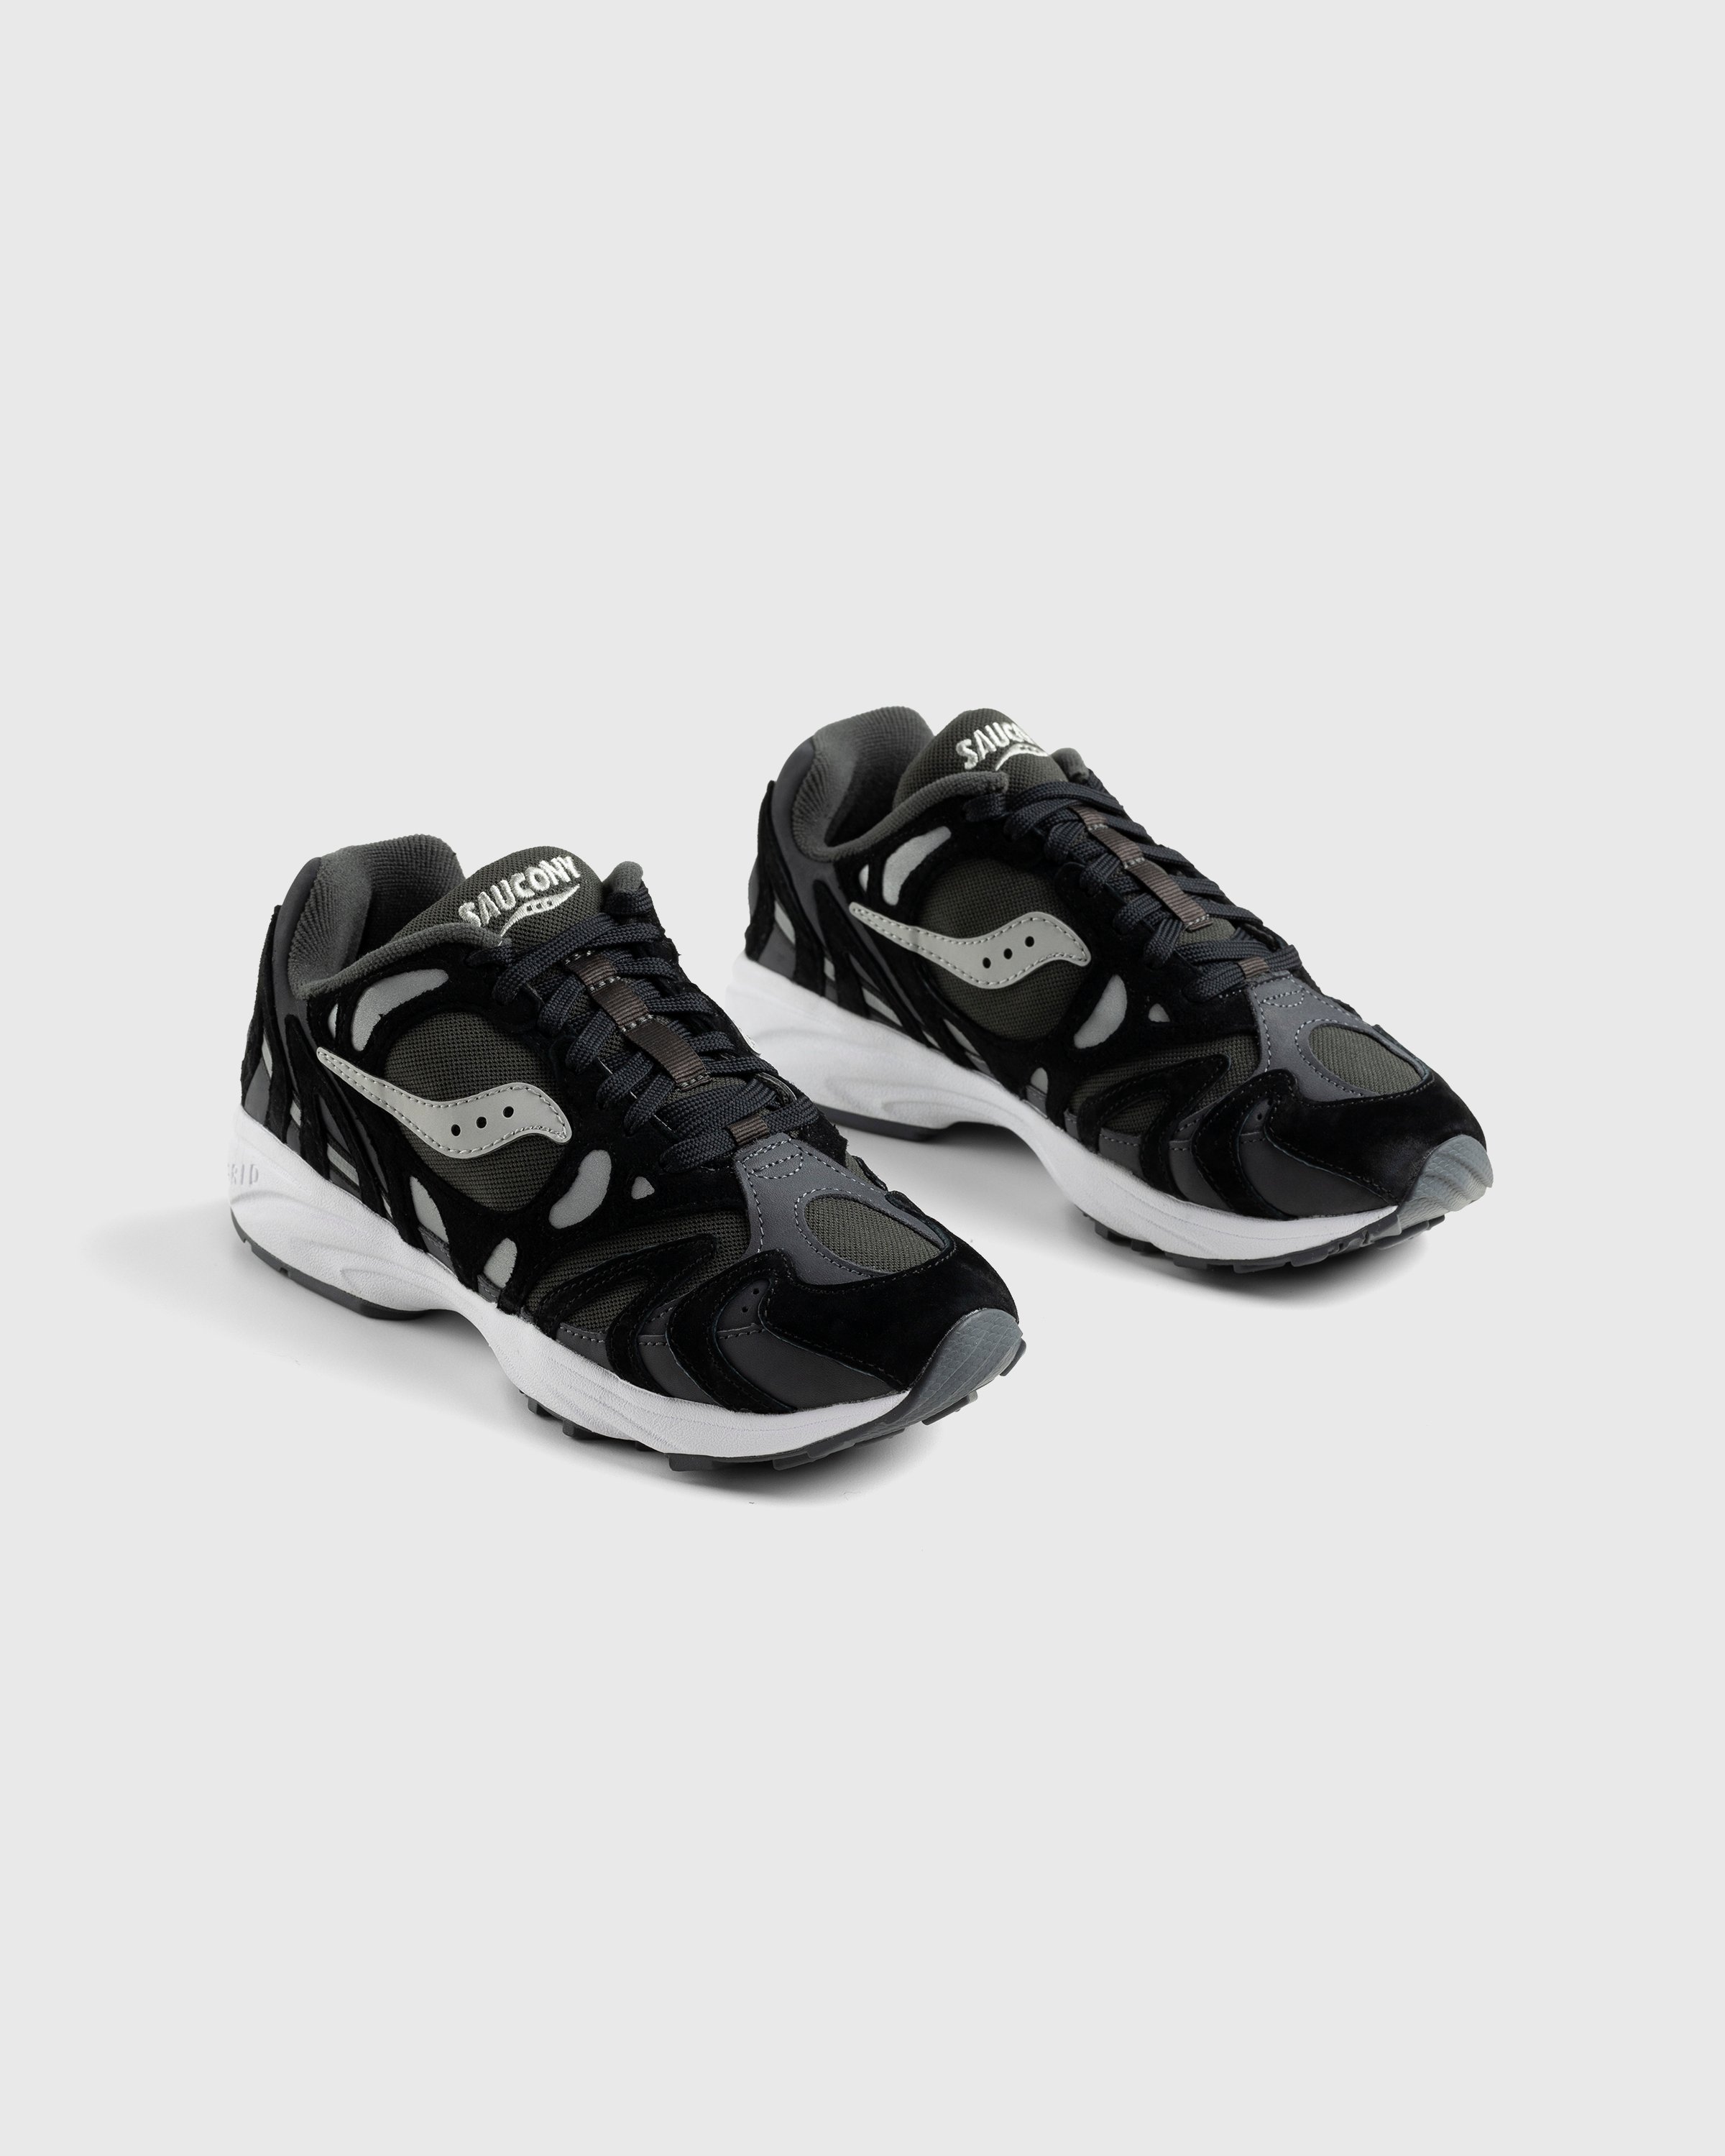 Saucony - Grid Azura 2000 Black/Silver - Footwear - Black - Image 3